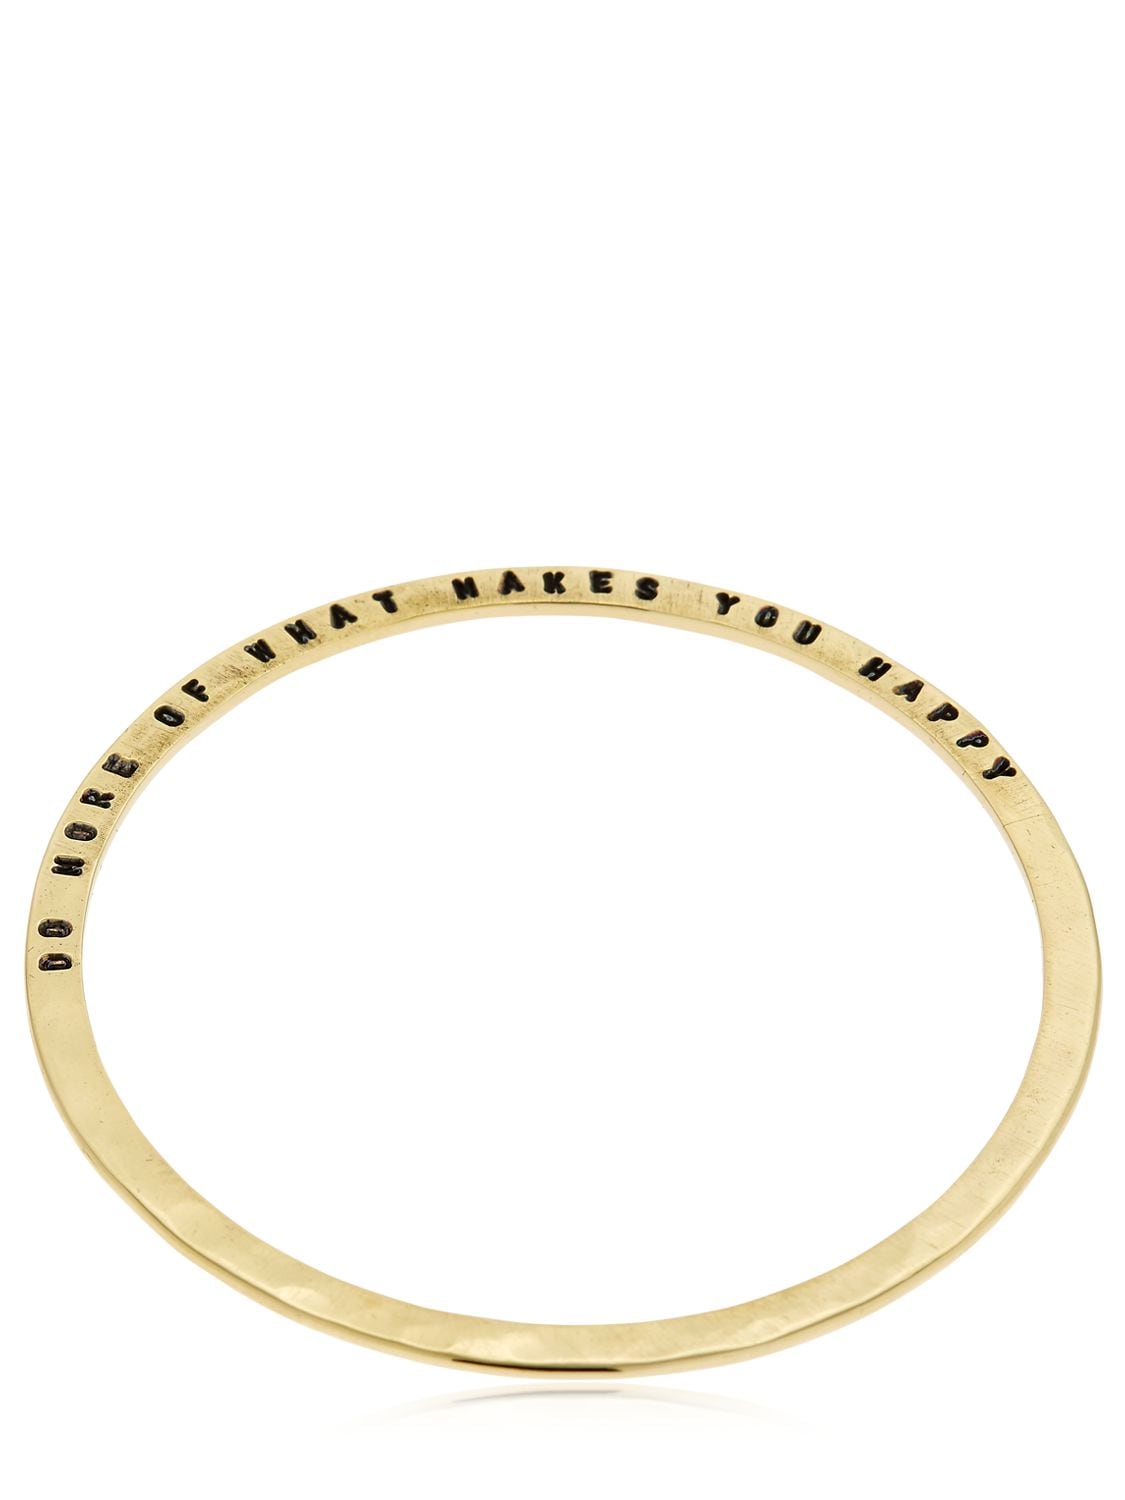 Gioielli Corsini Do More Of What Makes You Happy Bracelet In Gold